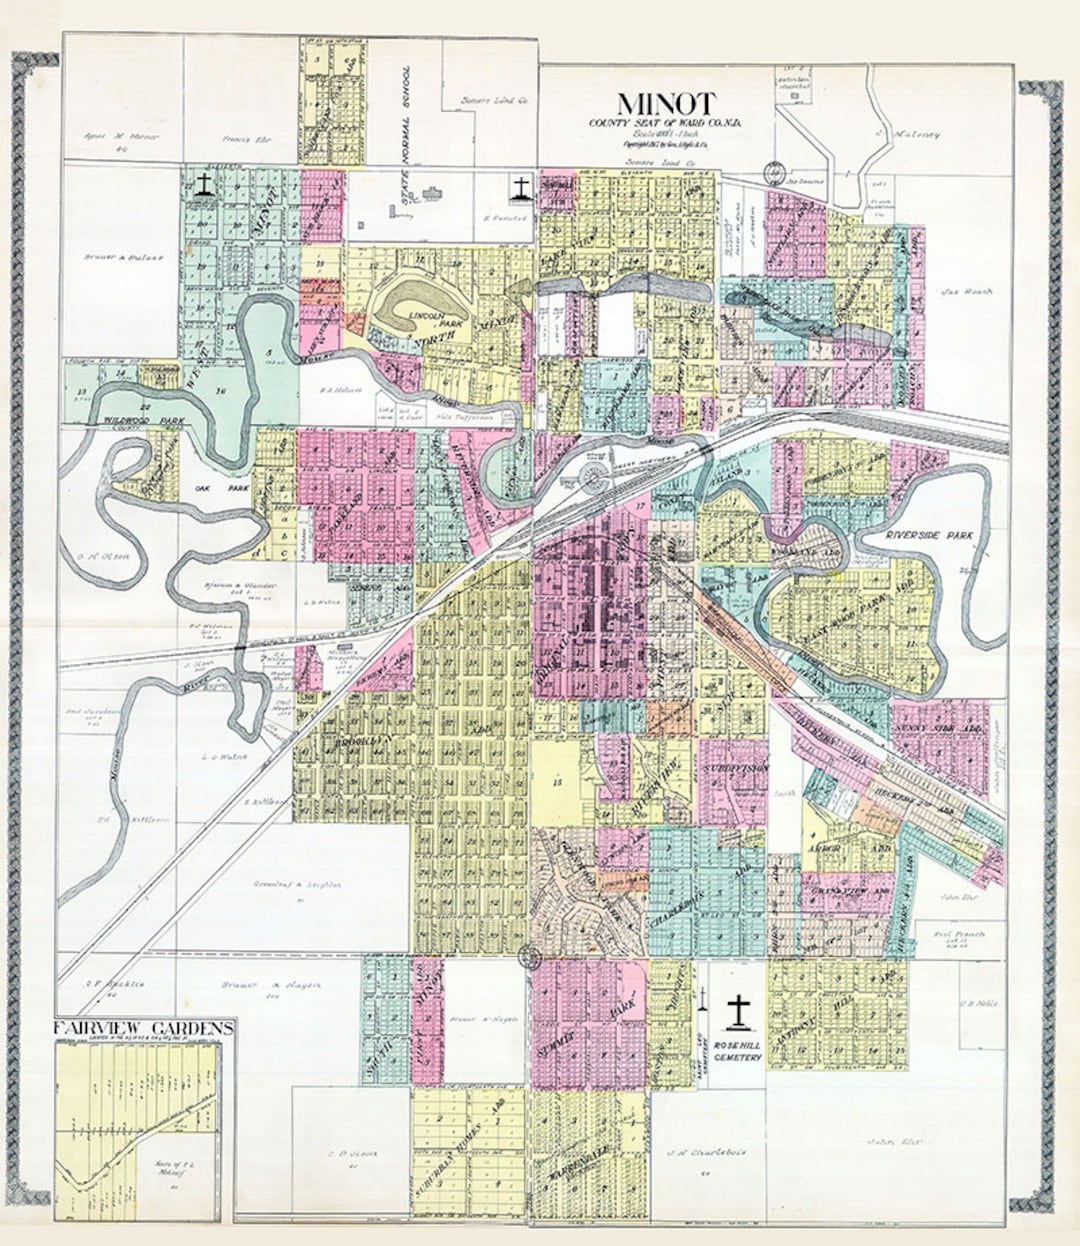 1915 Map of Minot Ward County North Dakota